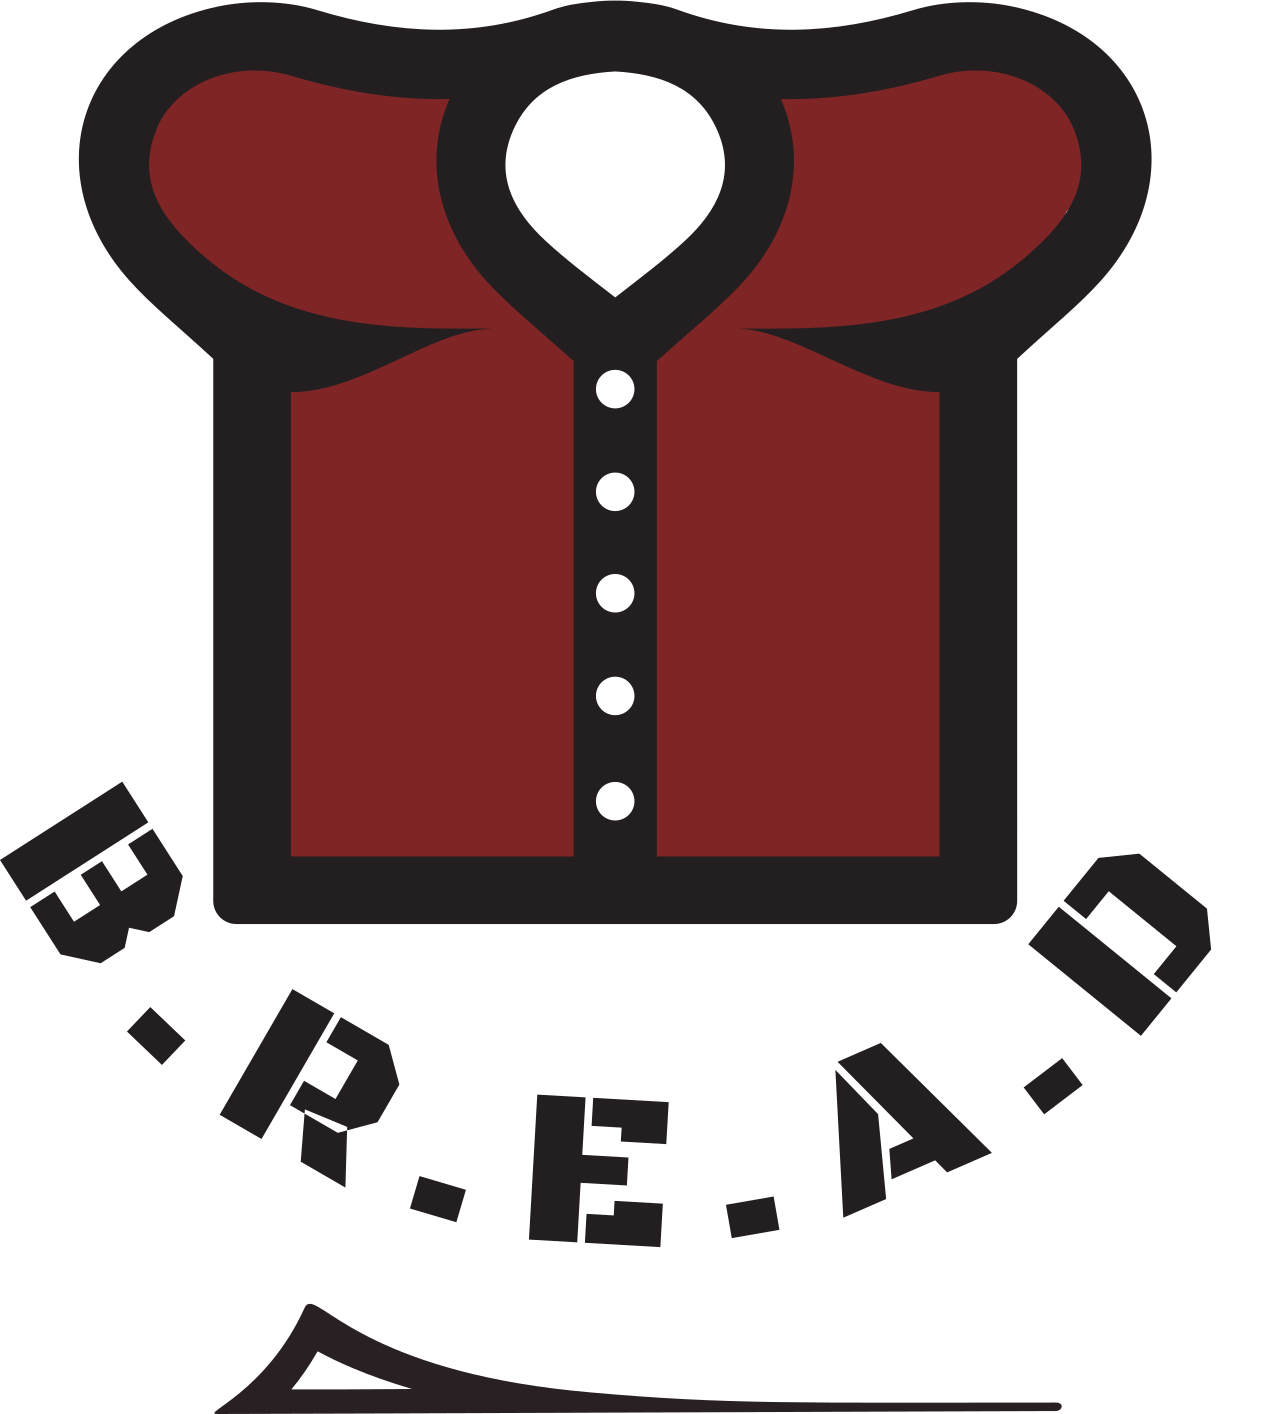 B.R.E.A.D 's logo